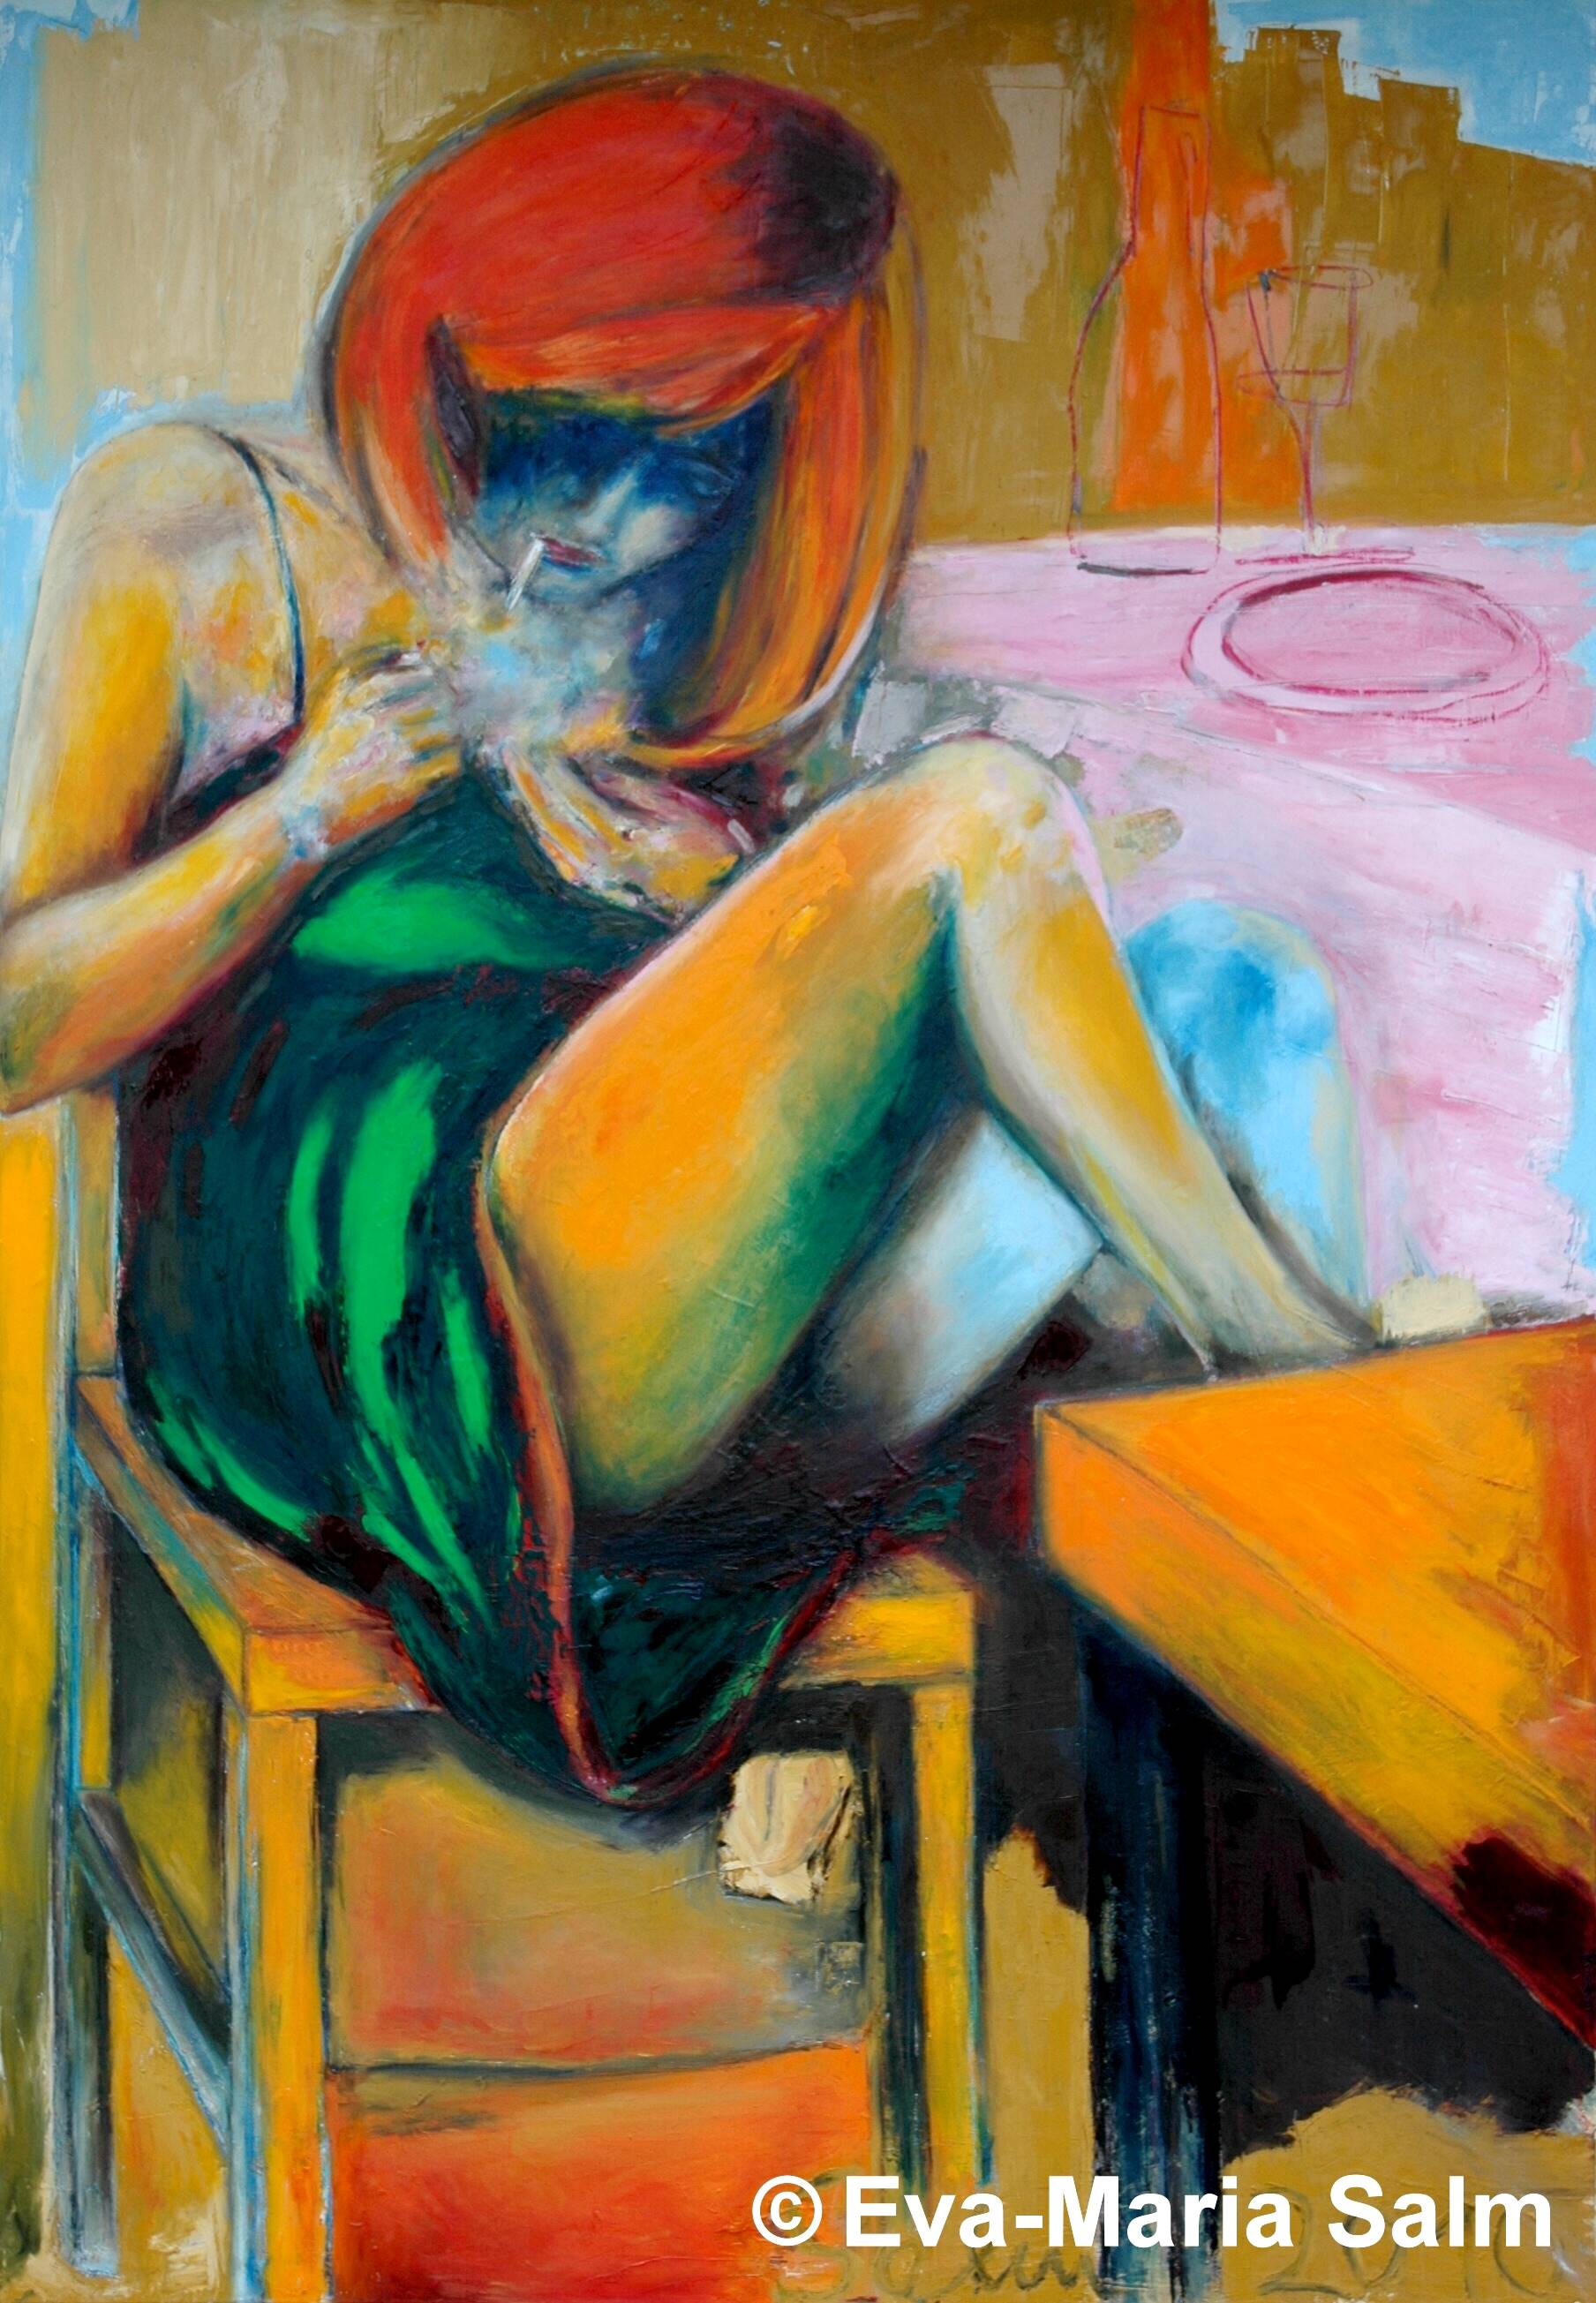 Eva-Maria Salm | Frau mit grünem Kleid | 2010 | Öl auf Leinwand | 230 x 160 cm